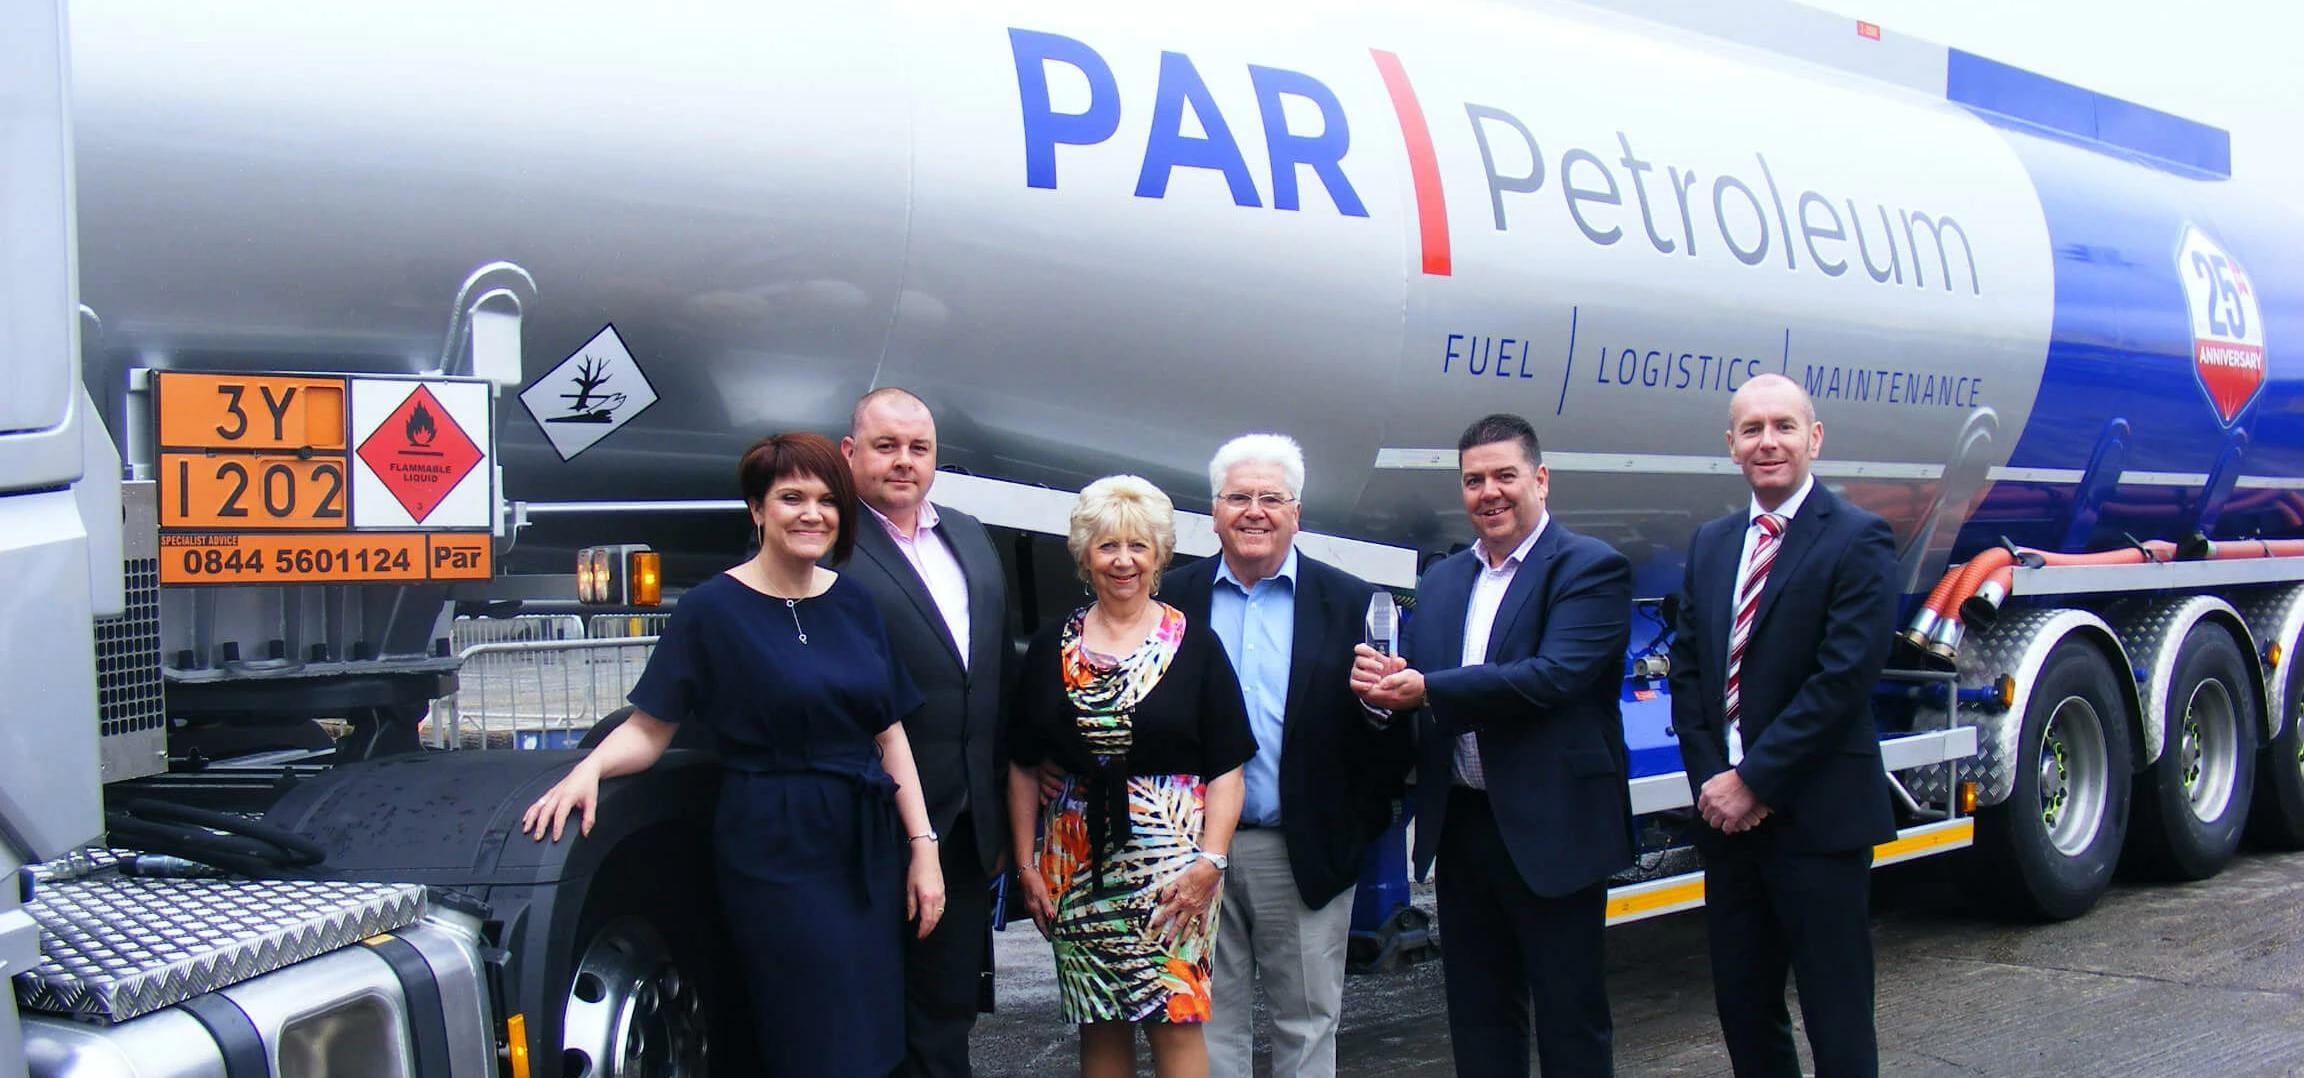 The Par Petroleum team Leanne Hardy, Stuart Hardy, Carol Roy-Toole, Peter Roy-Toole, Simon Roy-Toole